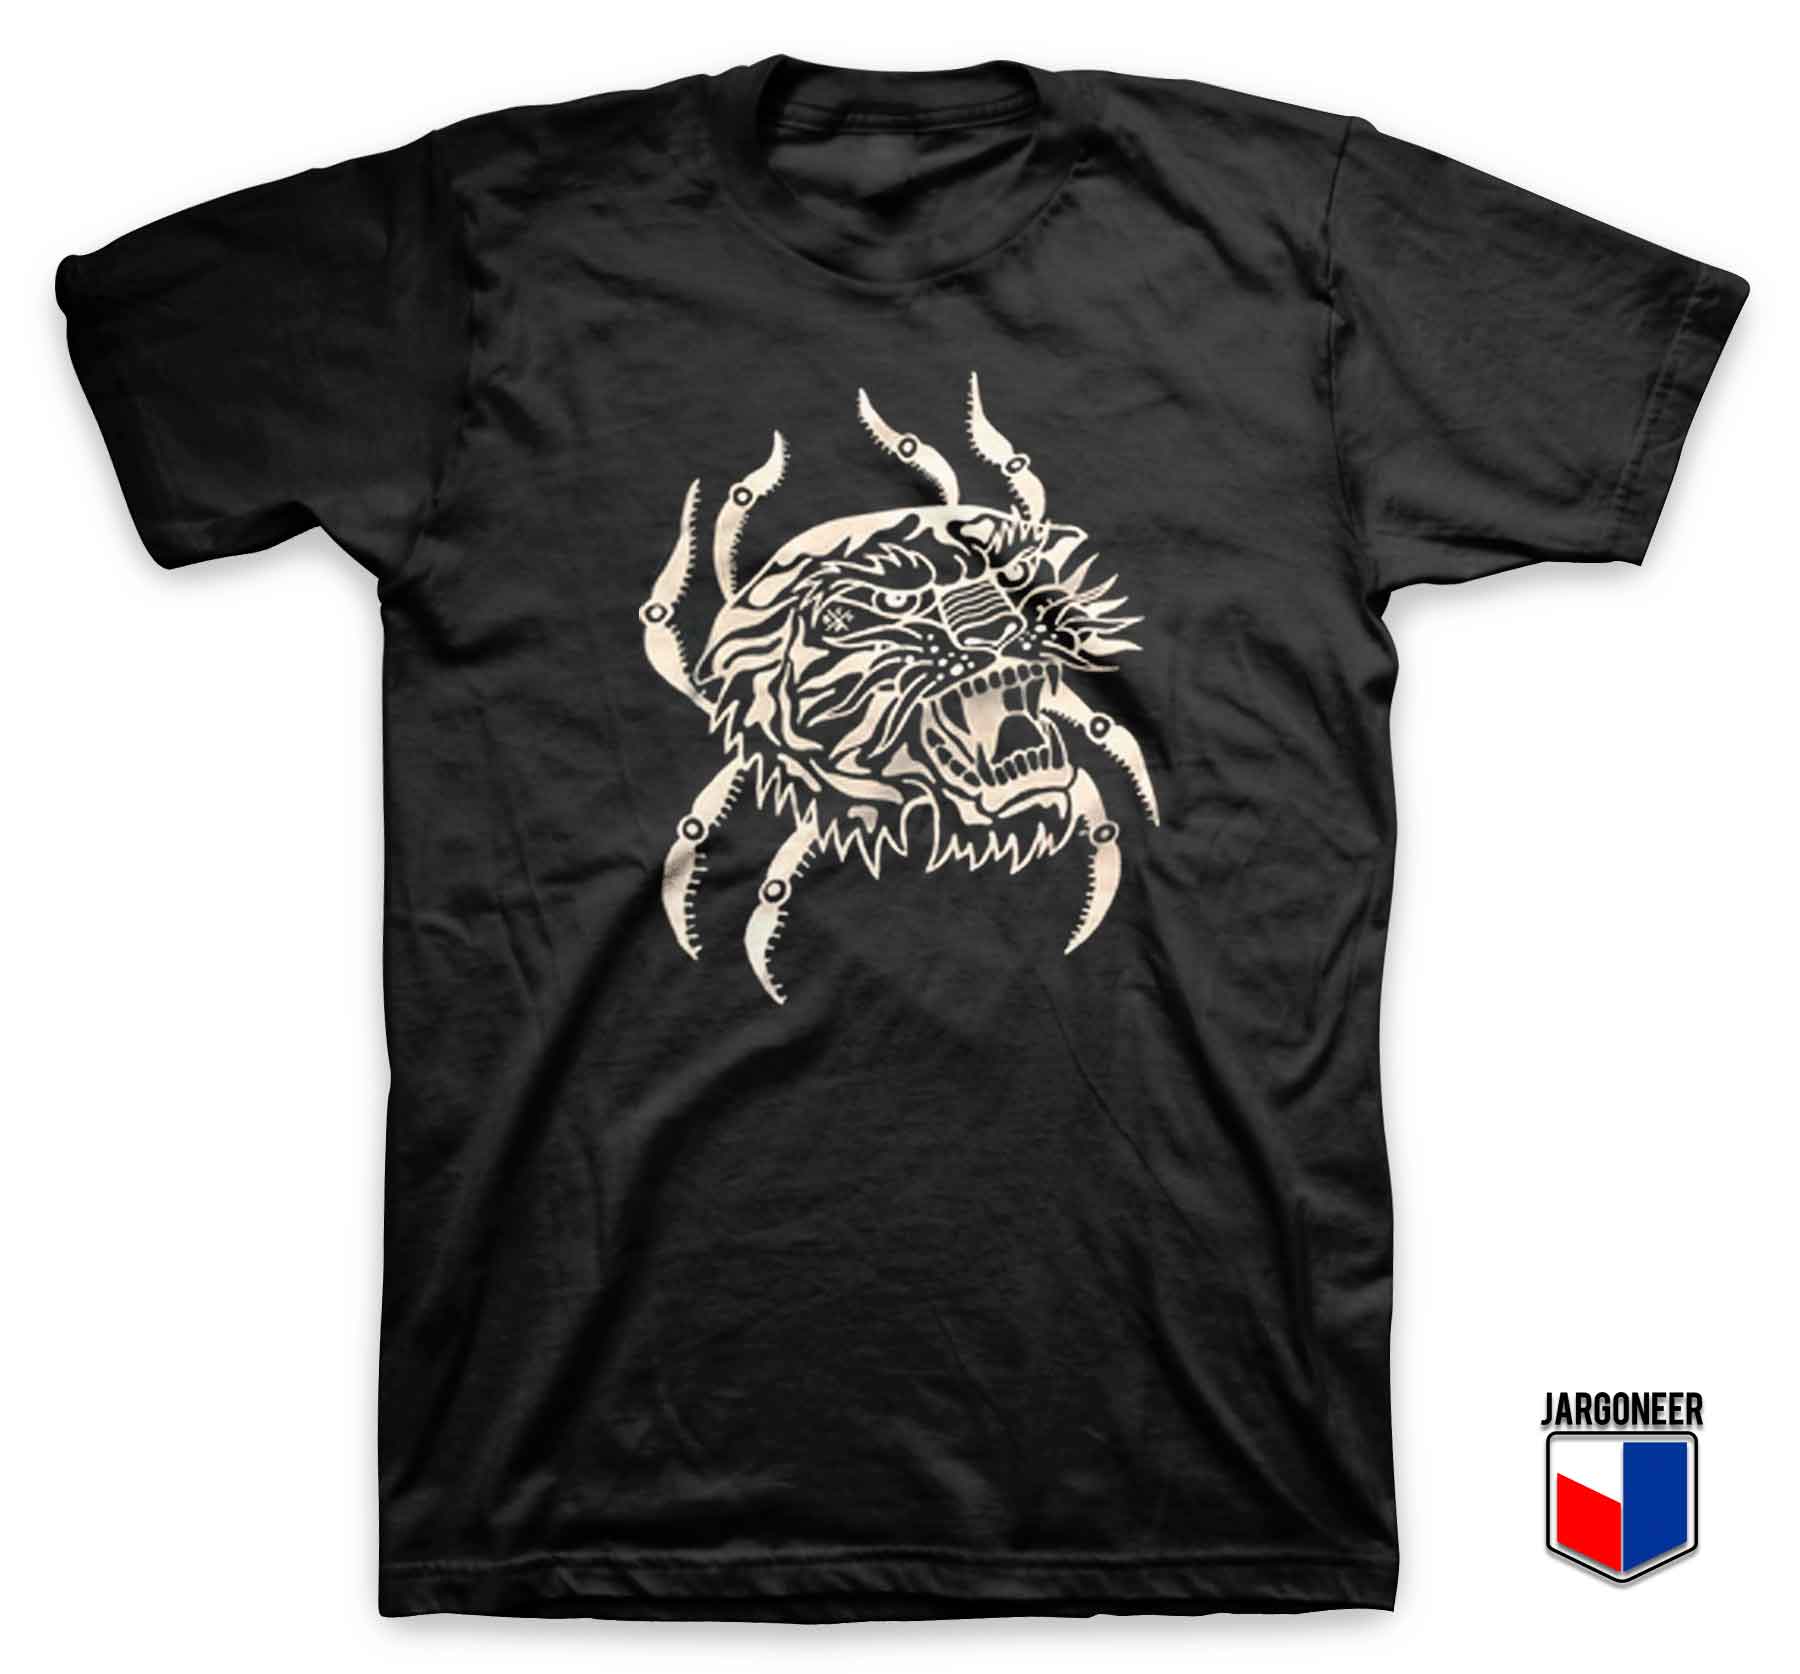 Tiger Spider - Shop Unique Graphic Cool Shirt Designs